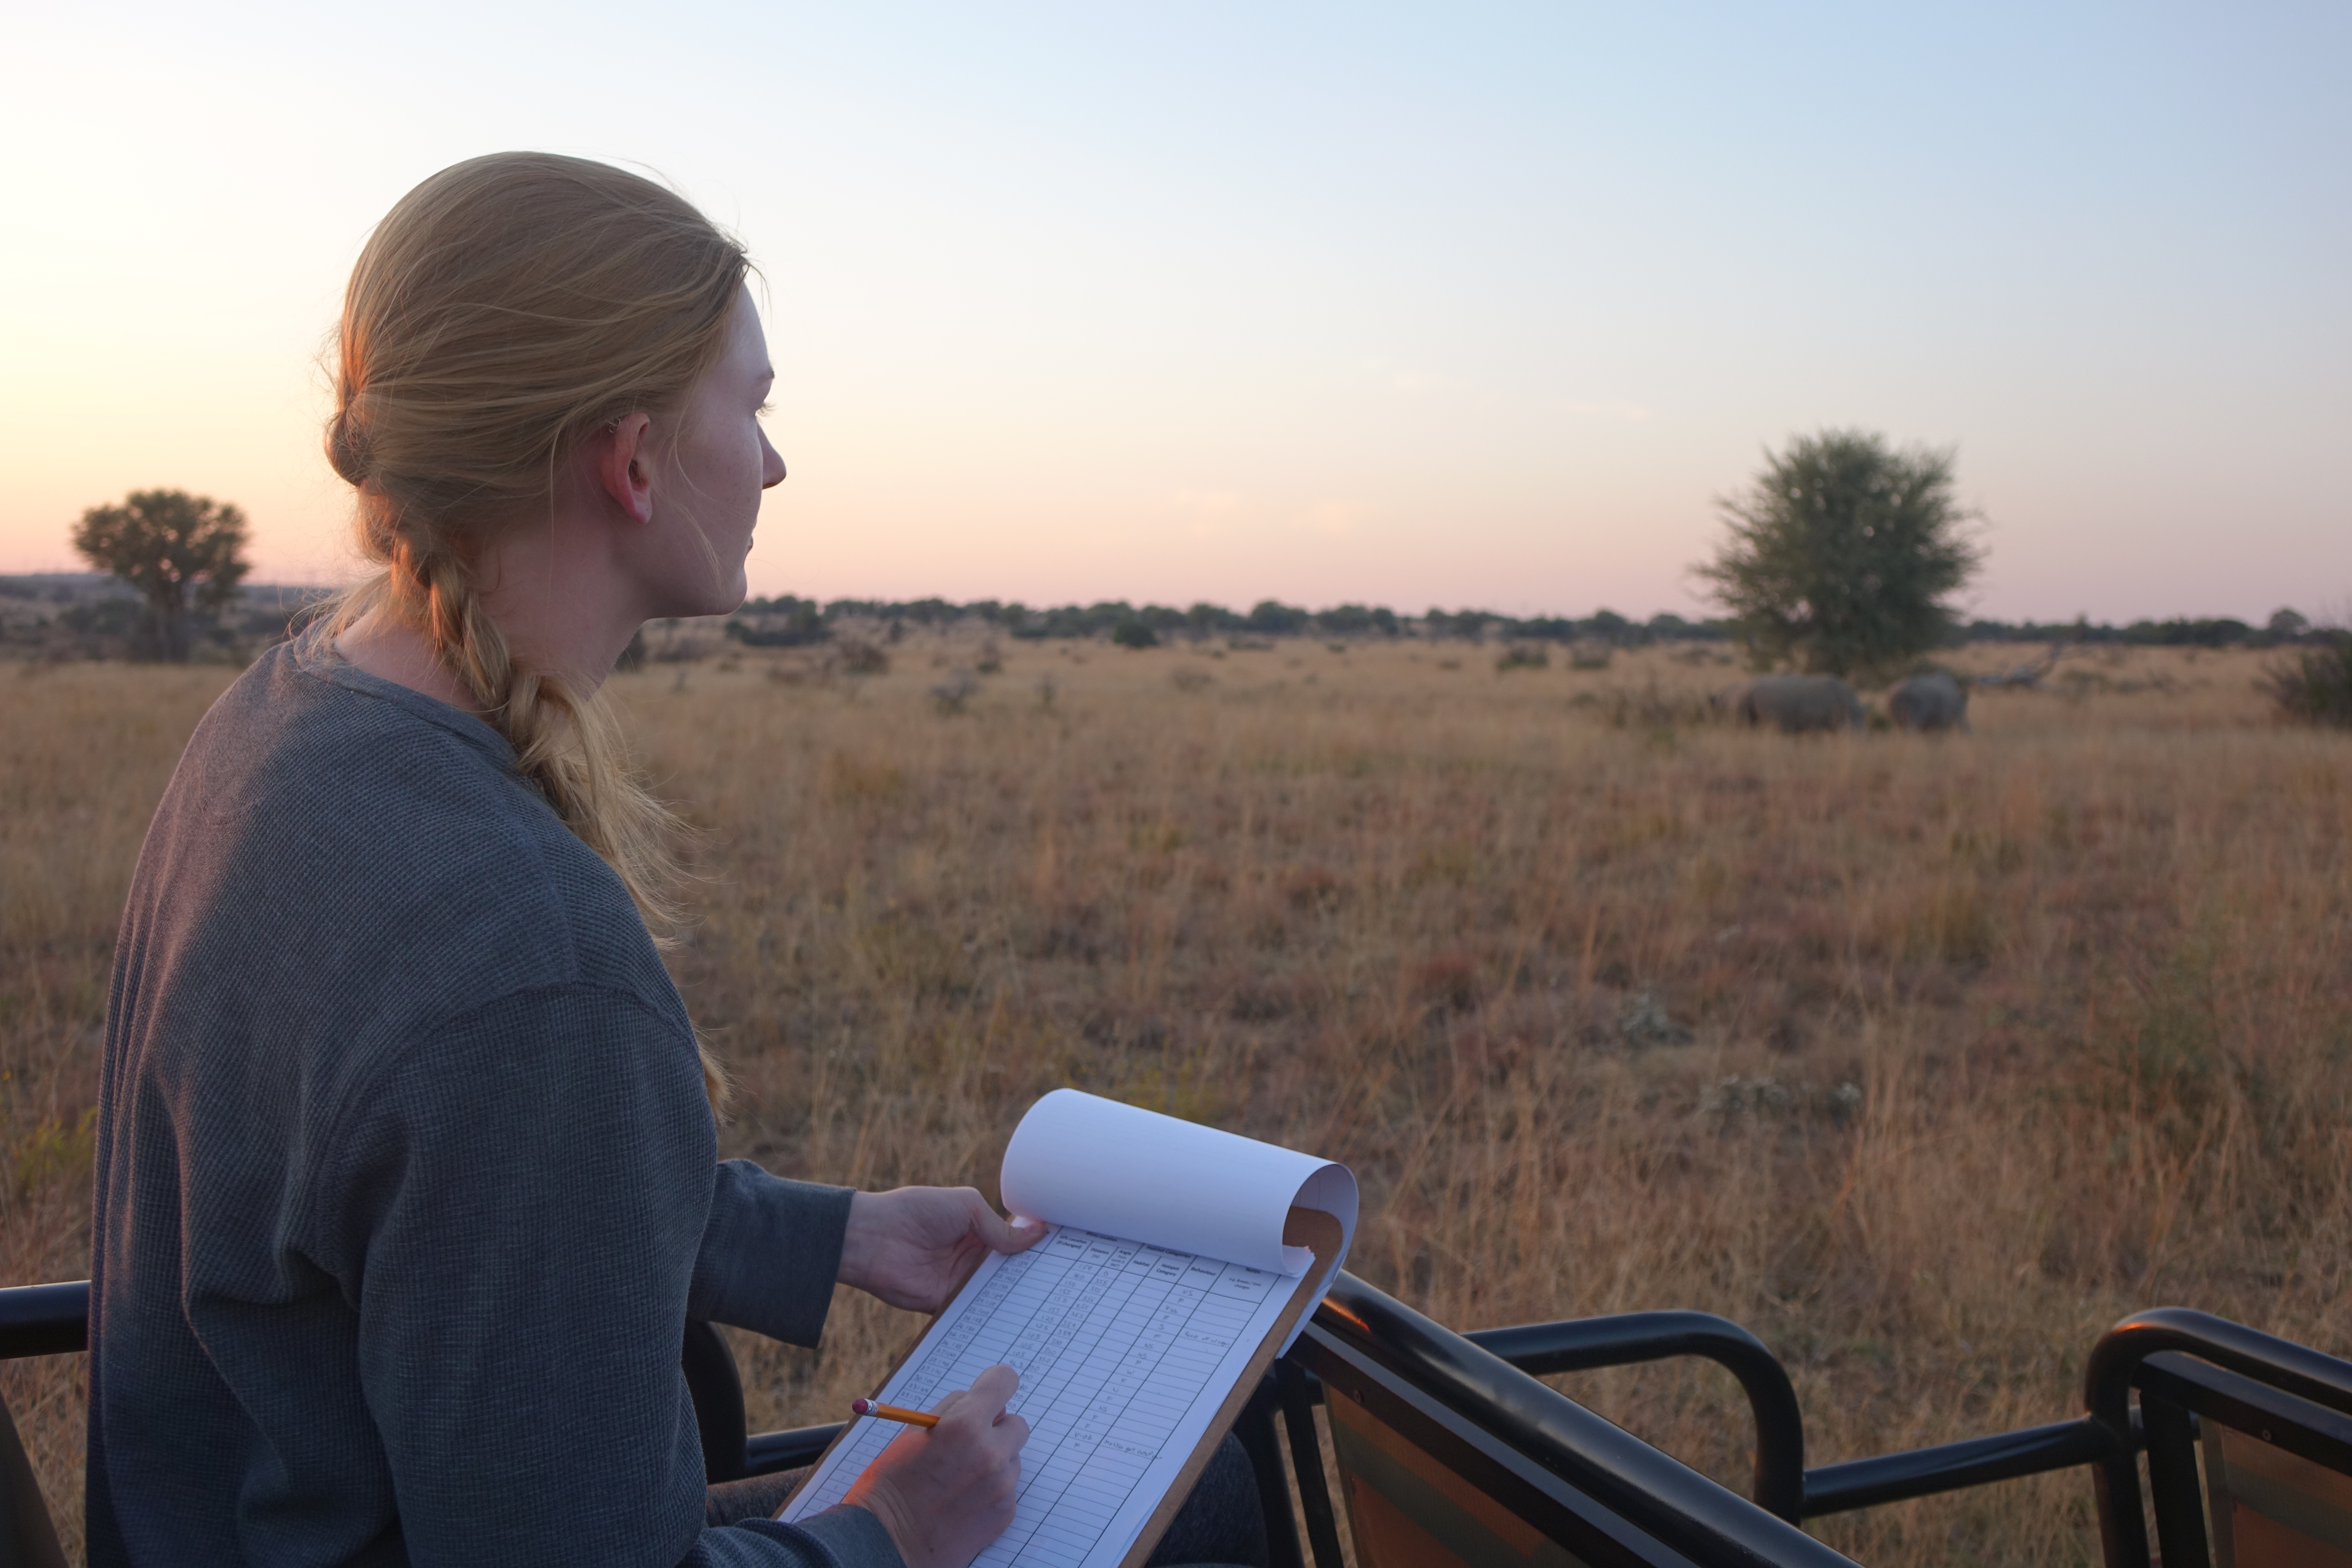 Ashley recording rhino observations.